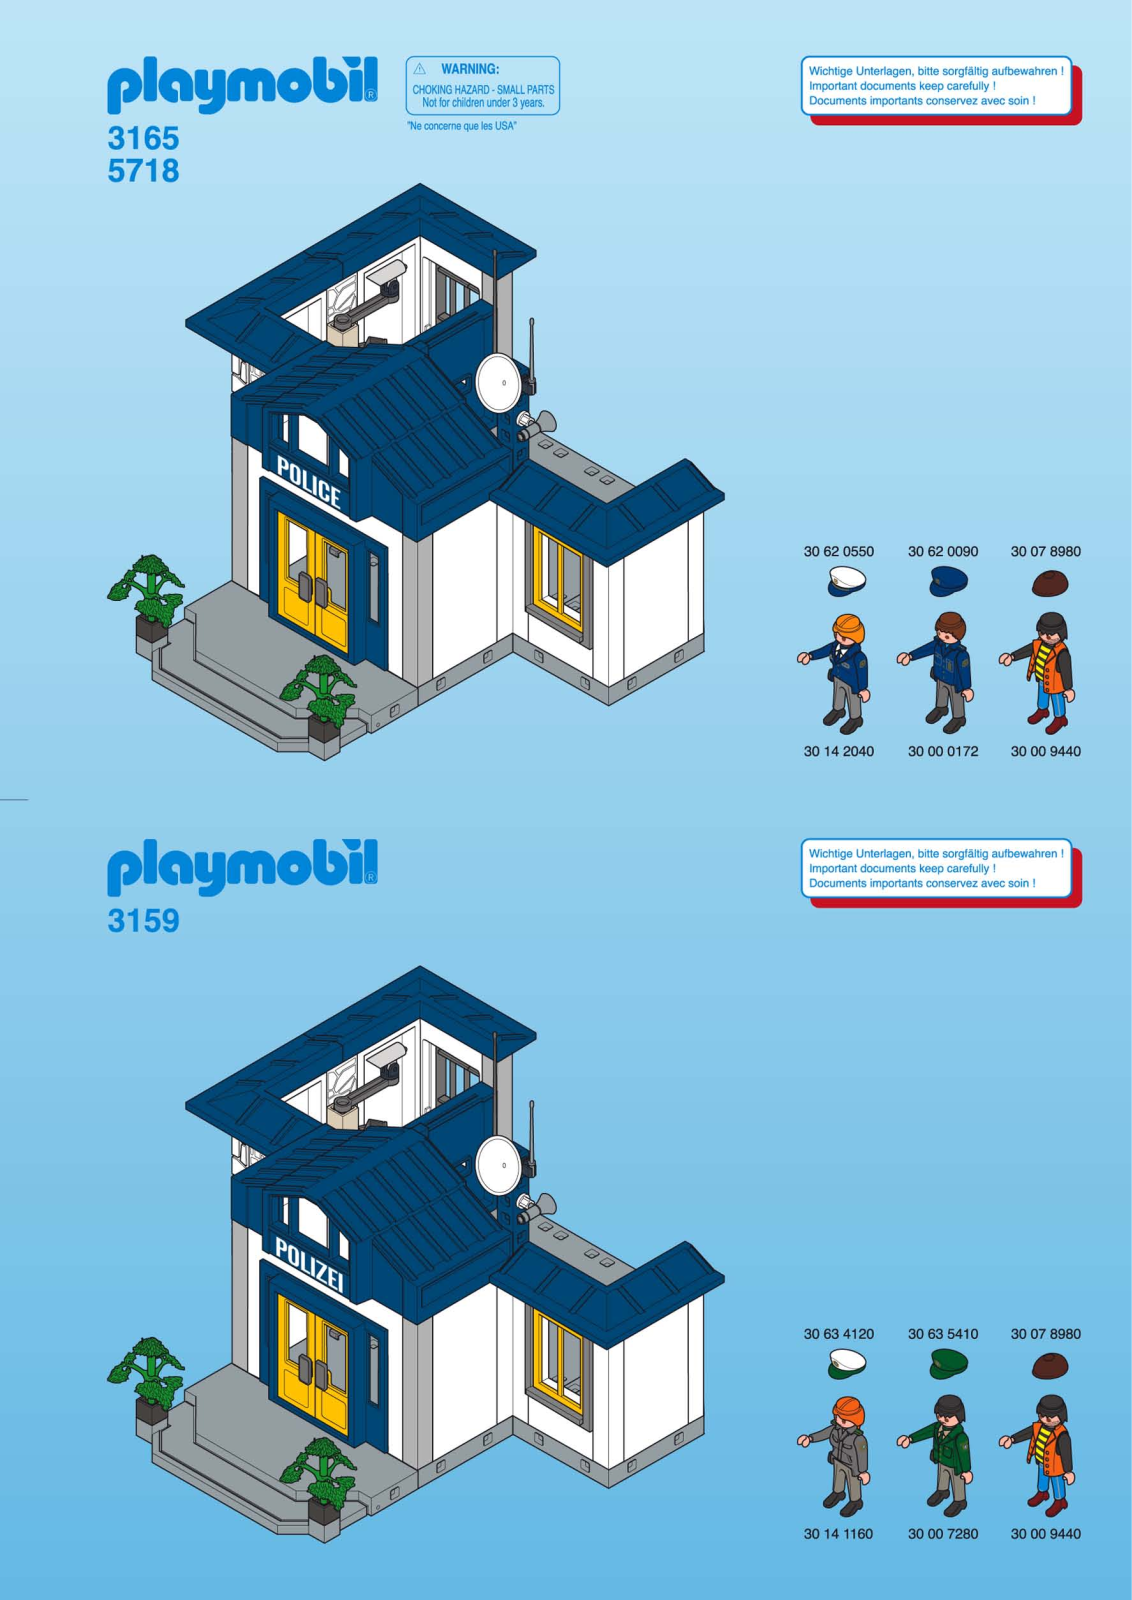 Playmobil 3165 Instructions